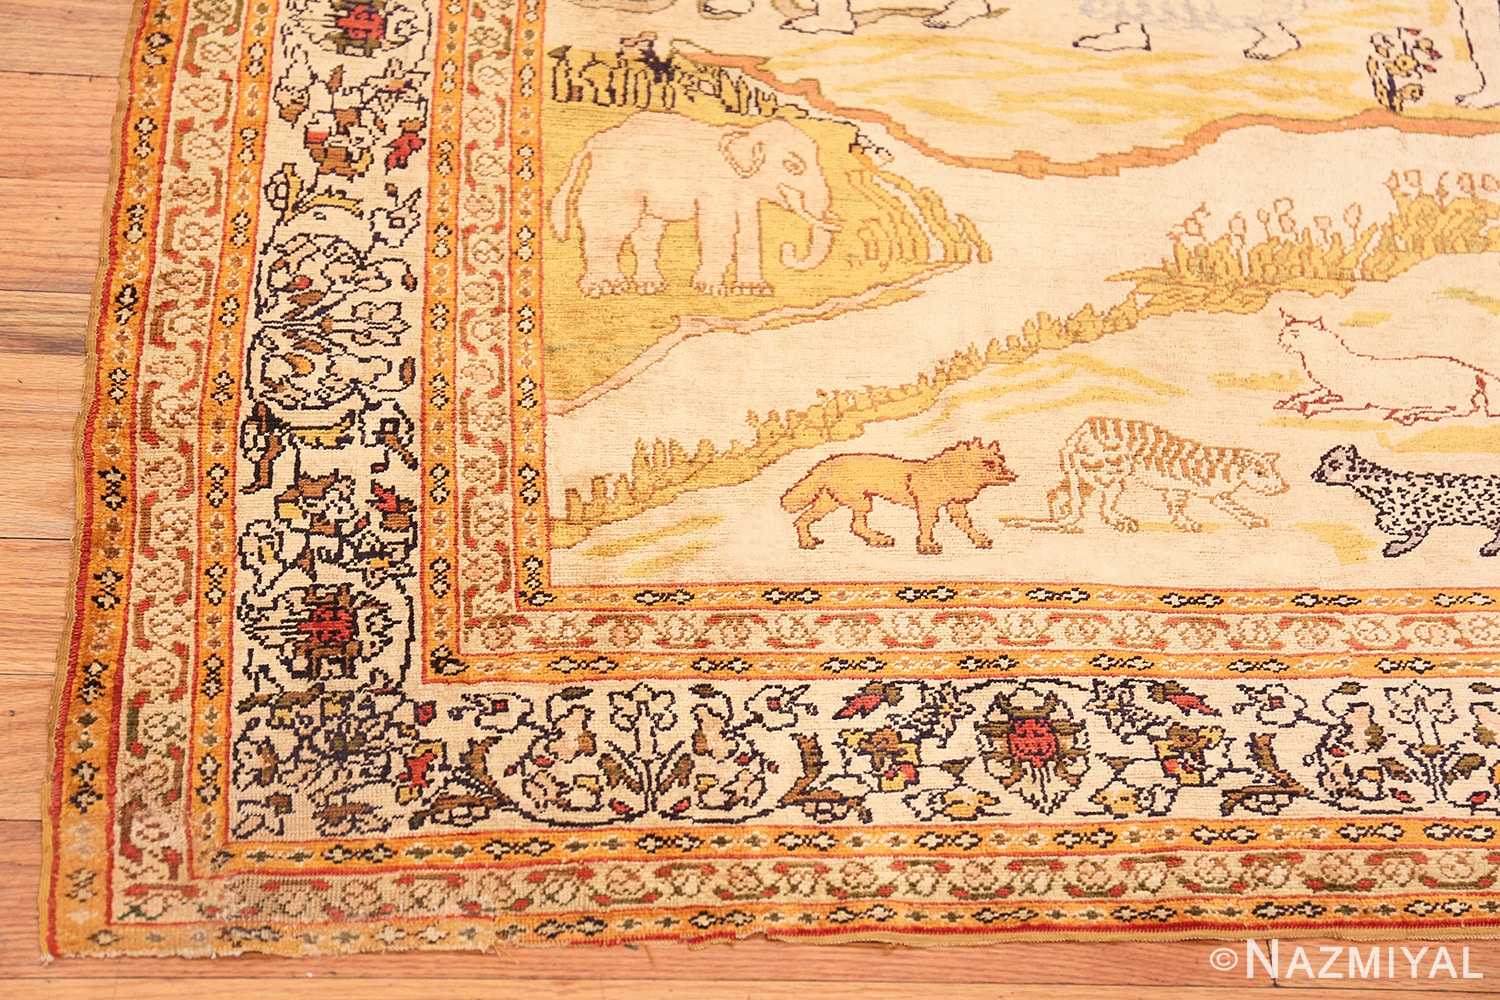 Corner Fine Biblical Adam and eve scene Turkish pictorial Antique silk rug 48890 by Nazmiyal